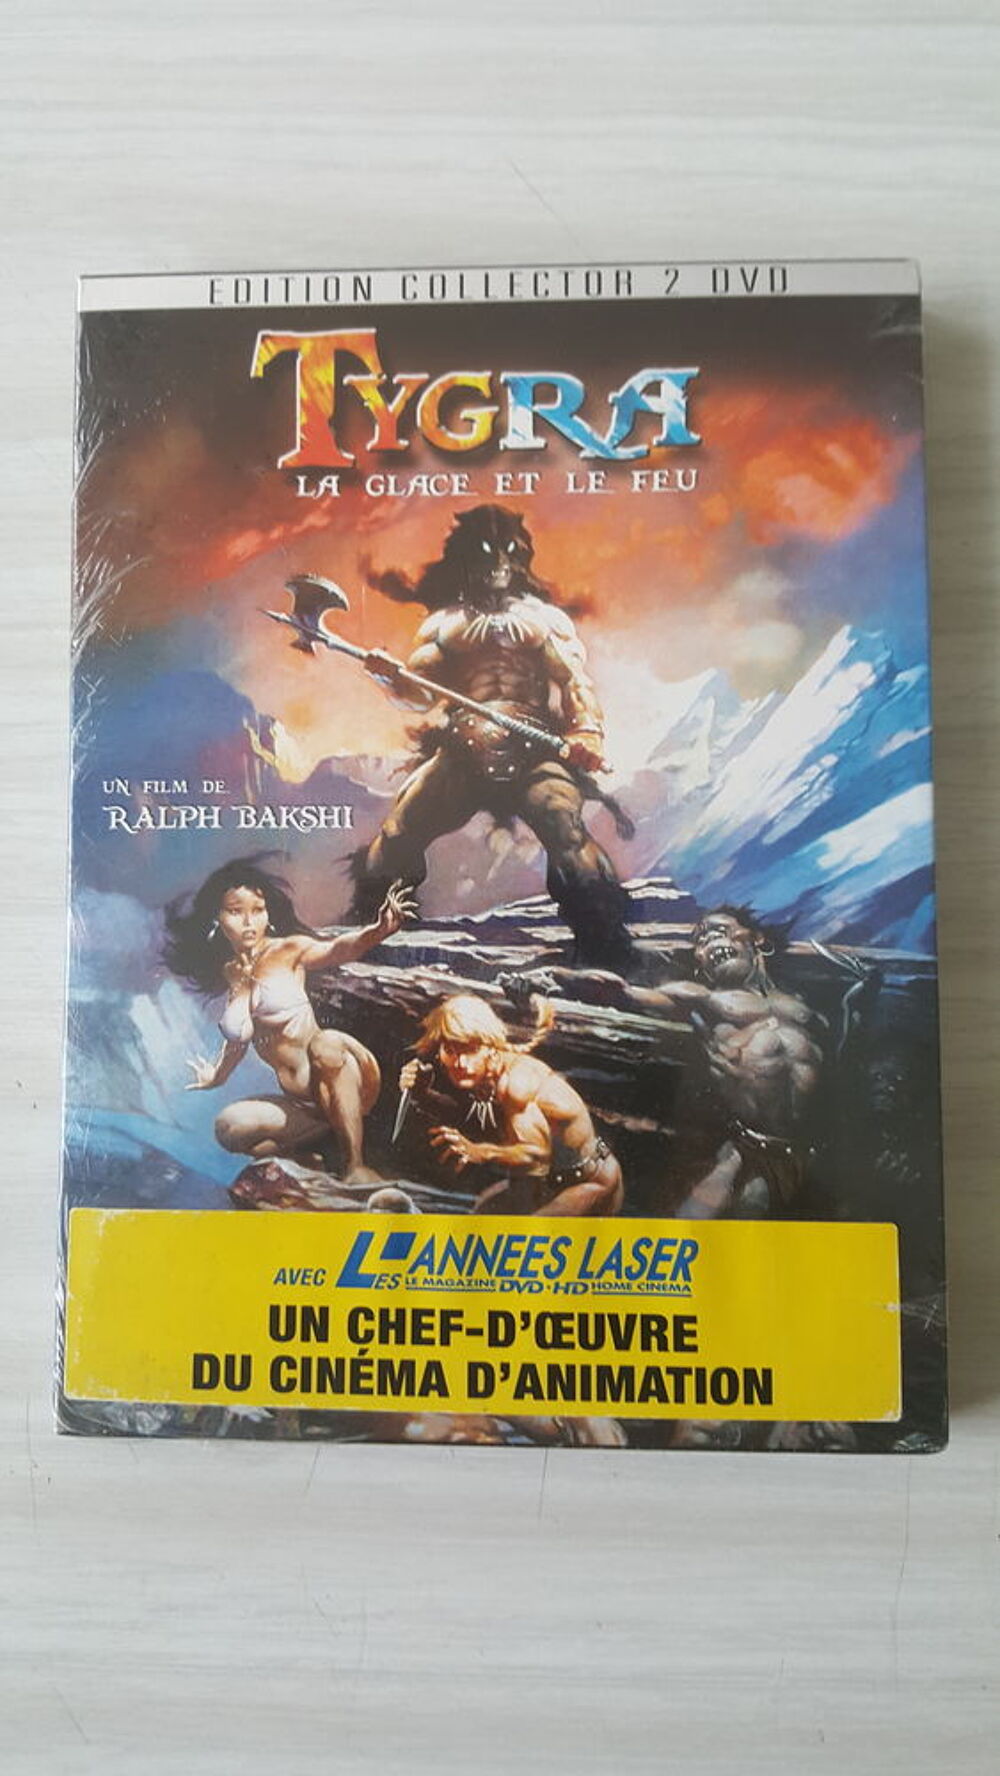 DVD TYGRA LA GLACE ET LE FEU DVD et blu-ray